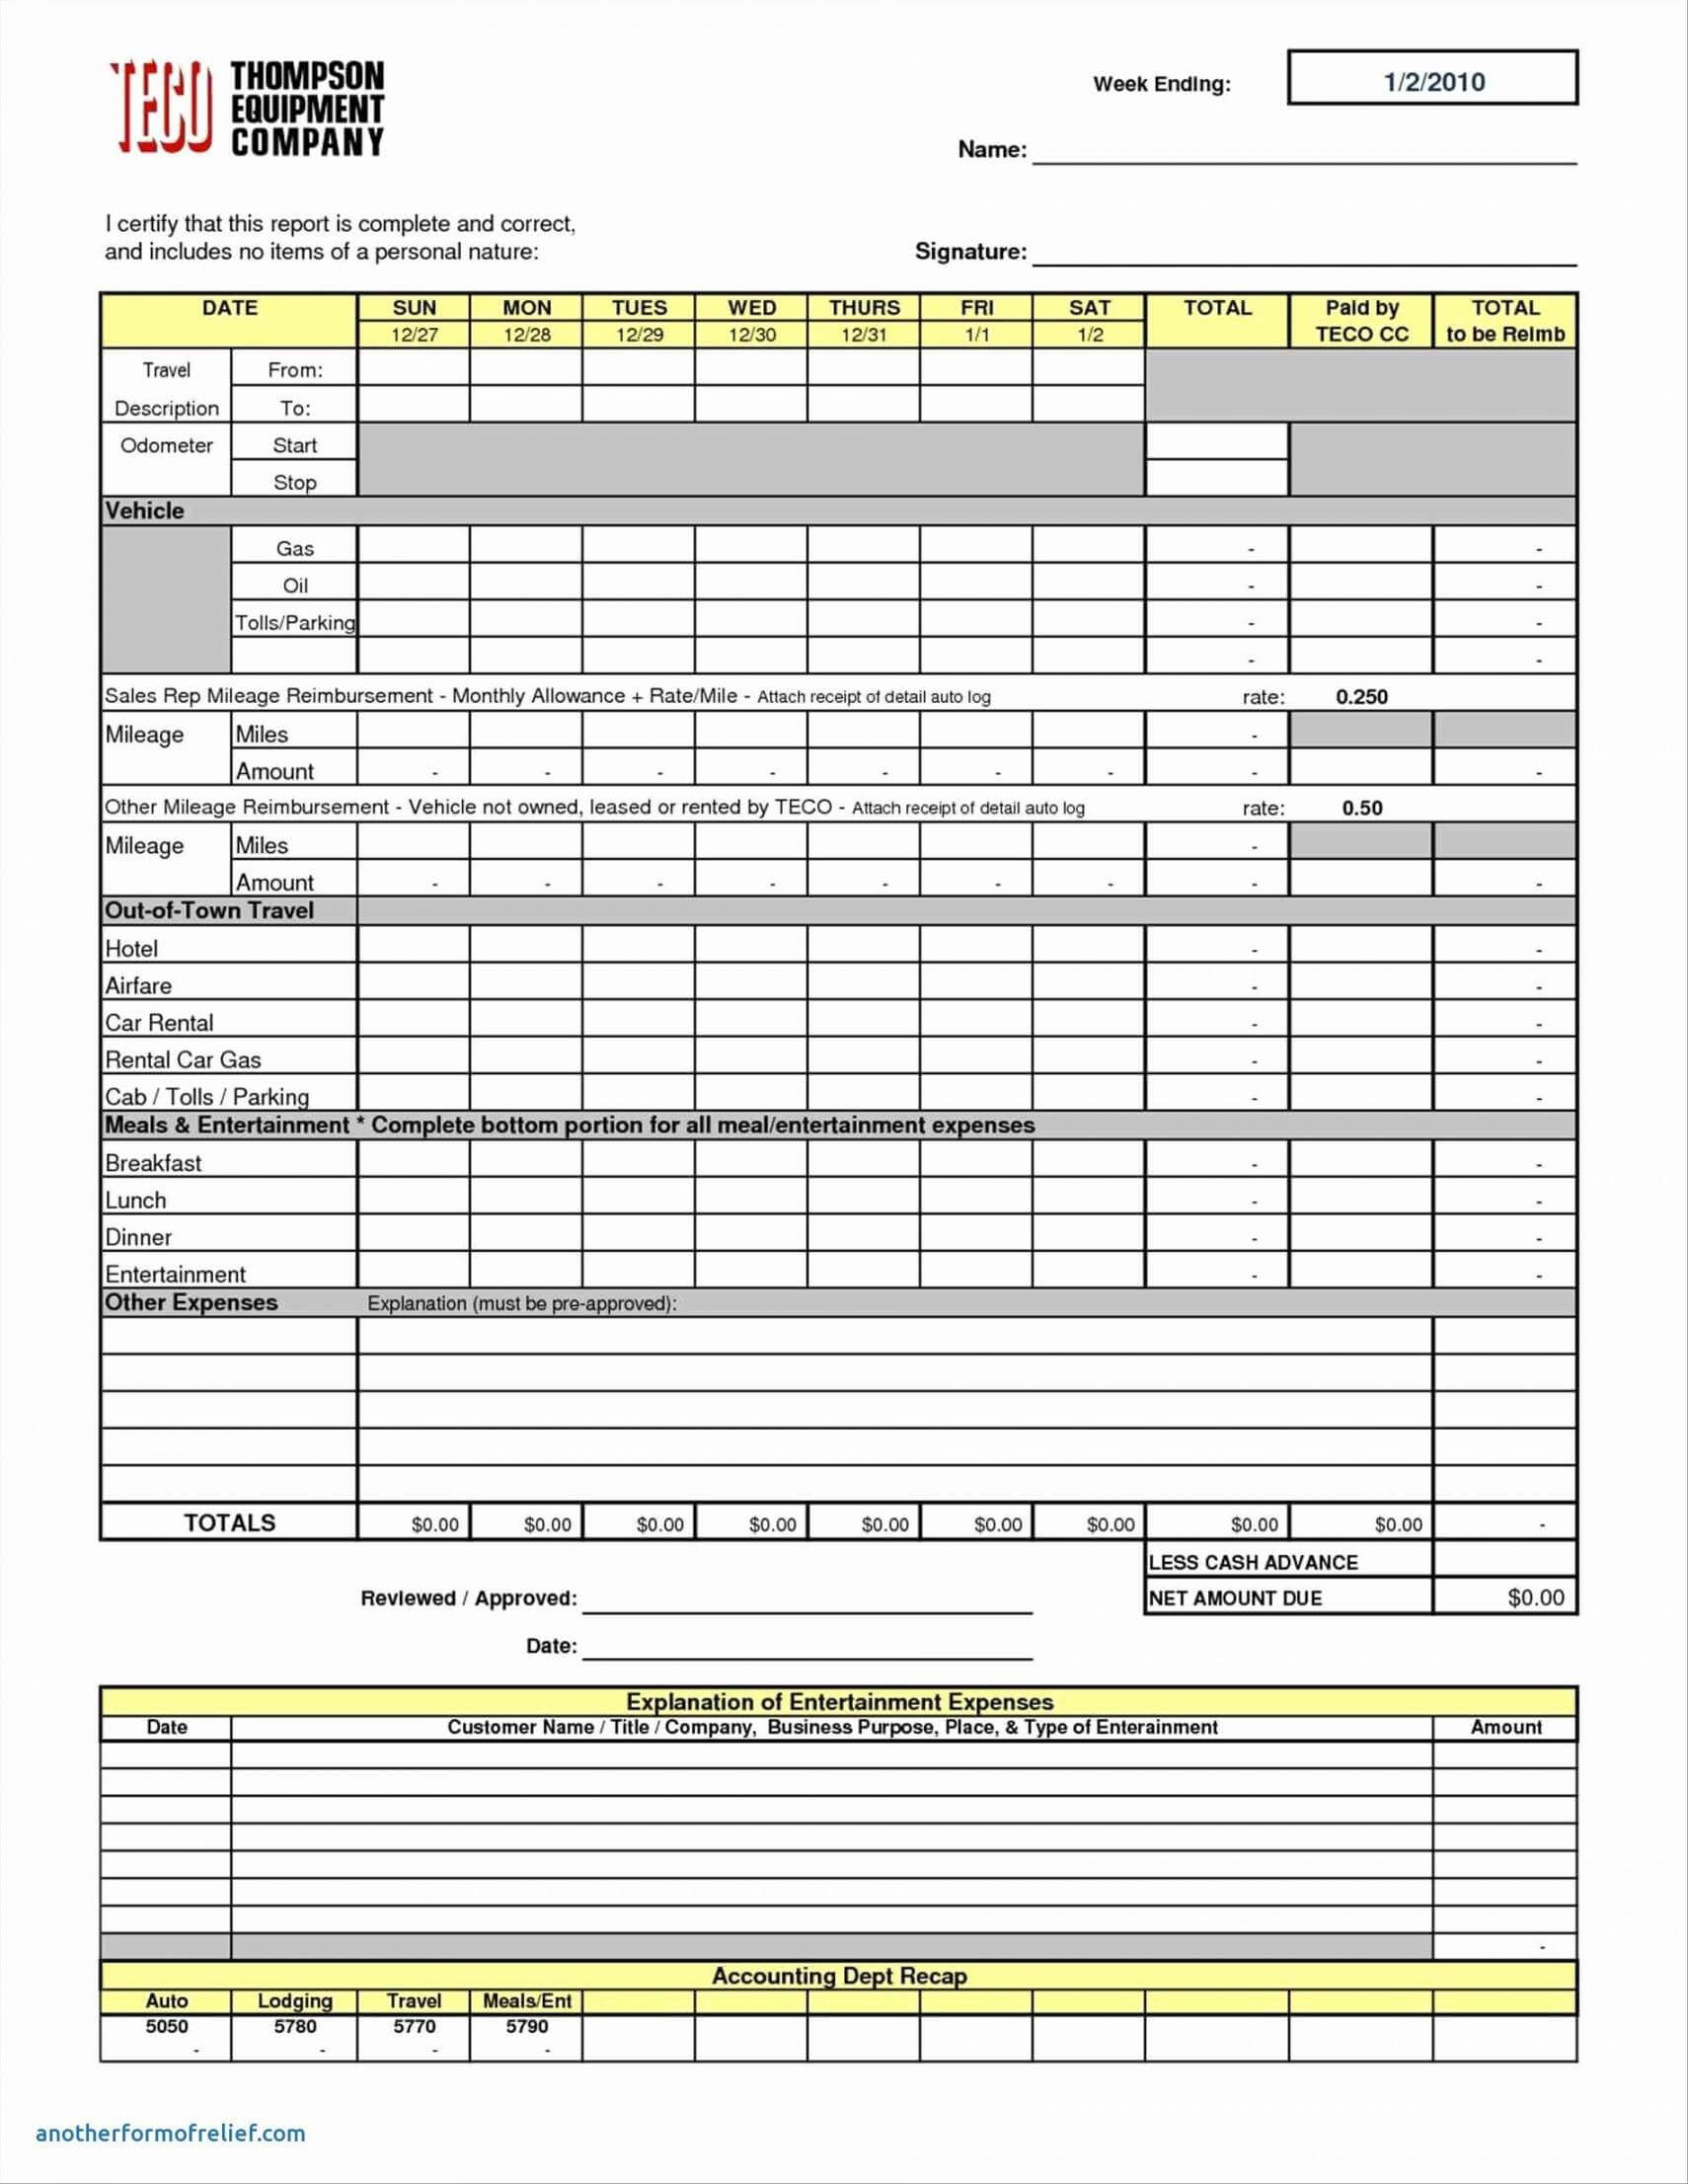 Sample Balance Sheet For Llc Glendale Community Document Intended For Air Balance Report Template